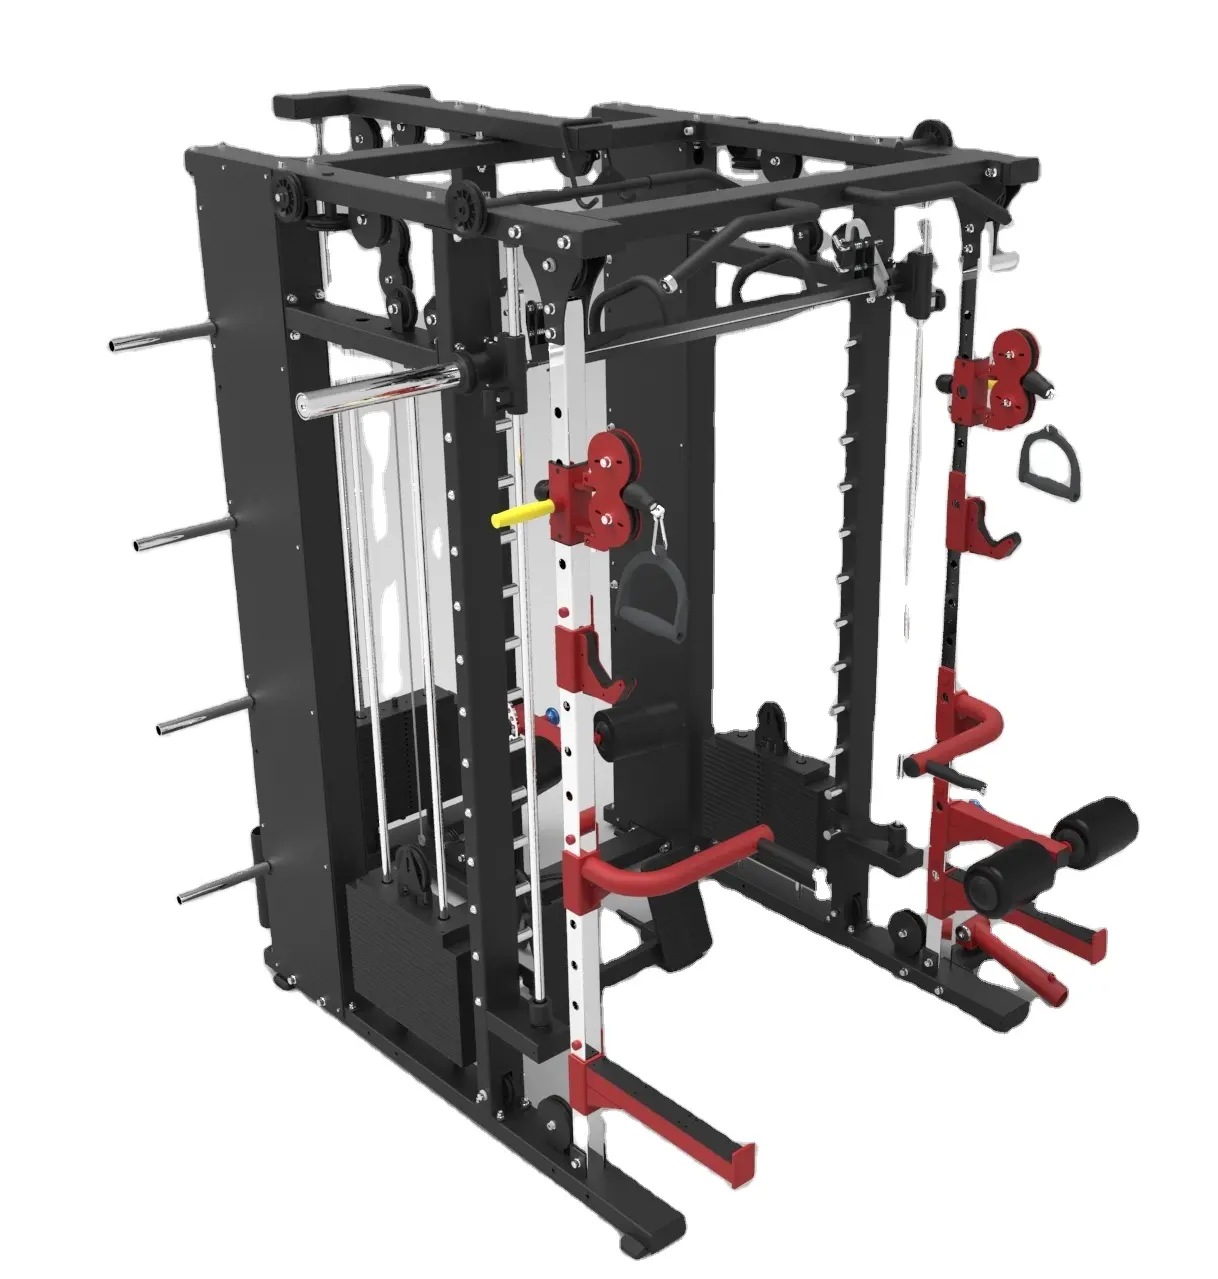 Pabrik grosir multi fungsi smith squat lat pull down baris rendah mesin latihan kekuatan mesin peralatan gym komprehensif